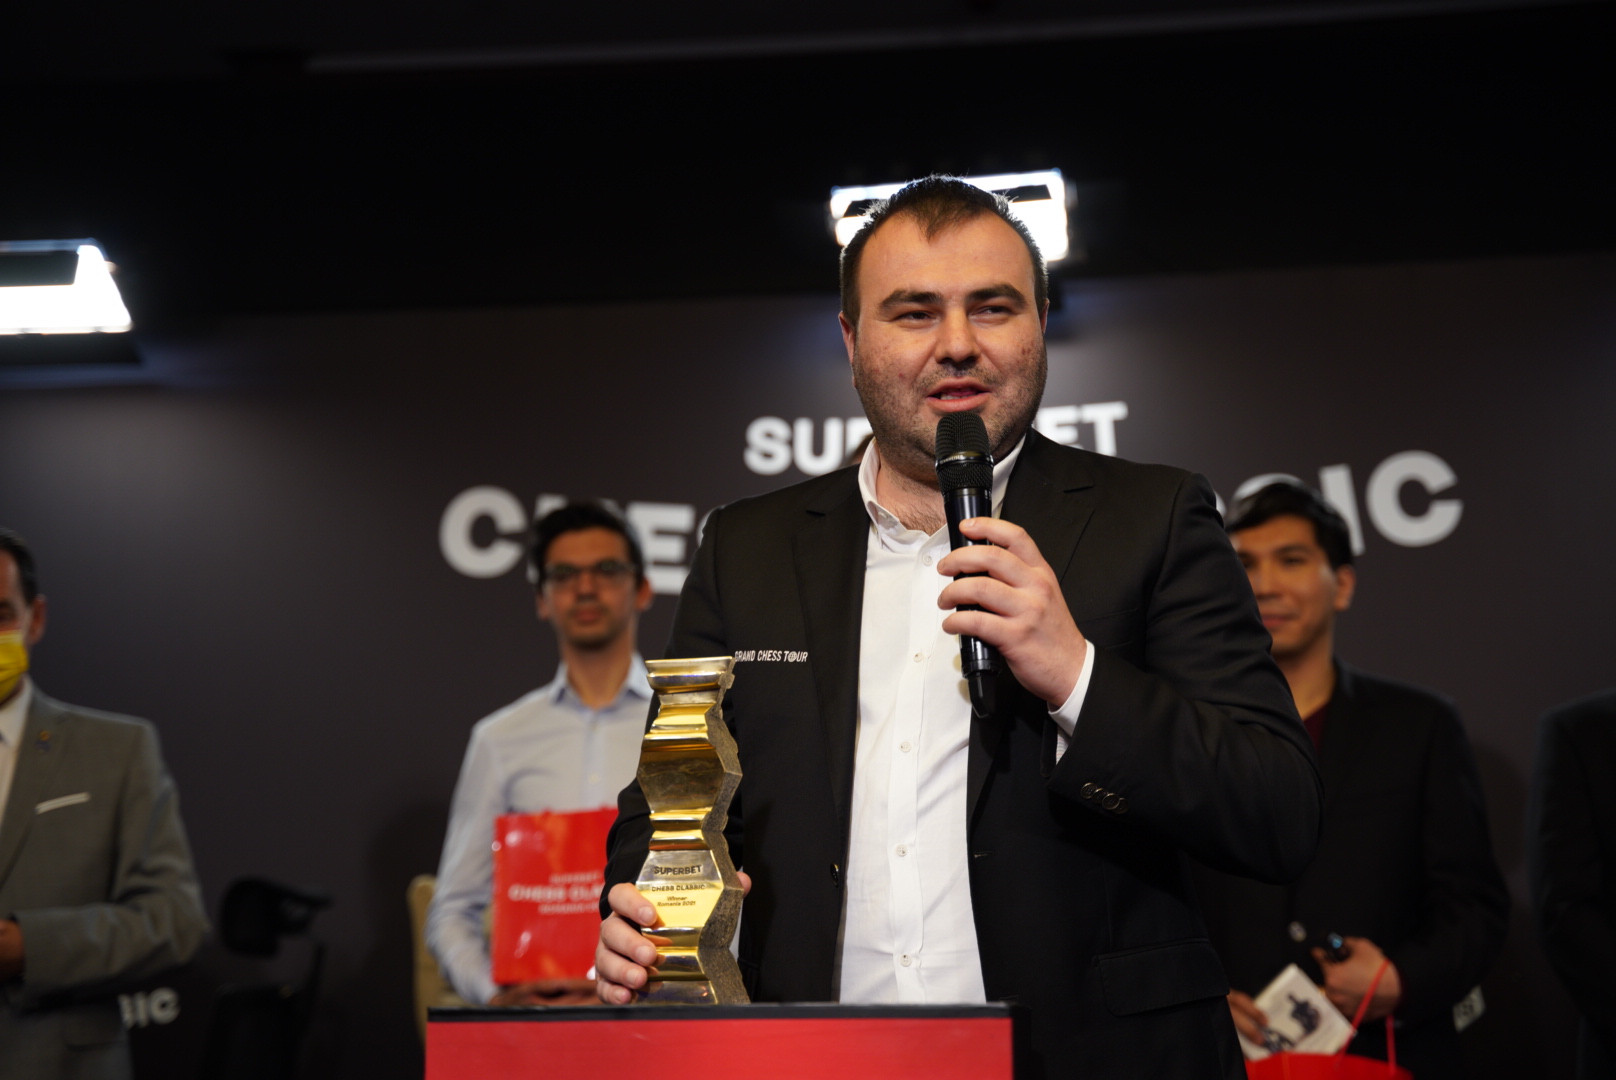 Marele maestru azer Shakhriyar Mamedyarov a câștigat trofeul Superbet Chess Classic 2021